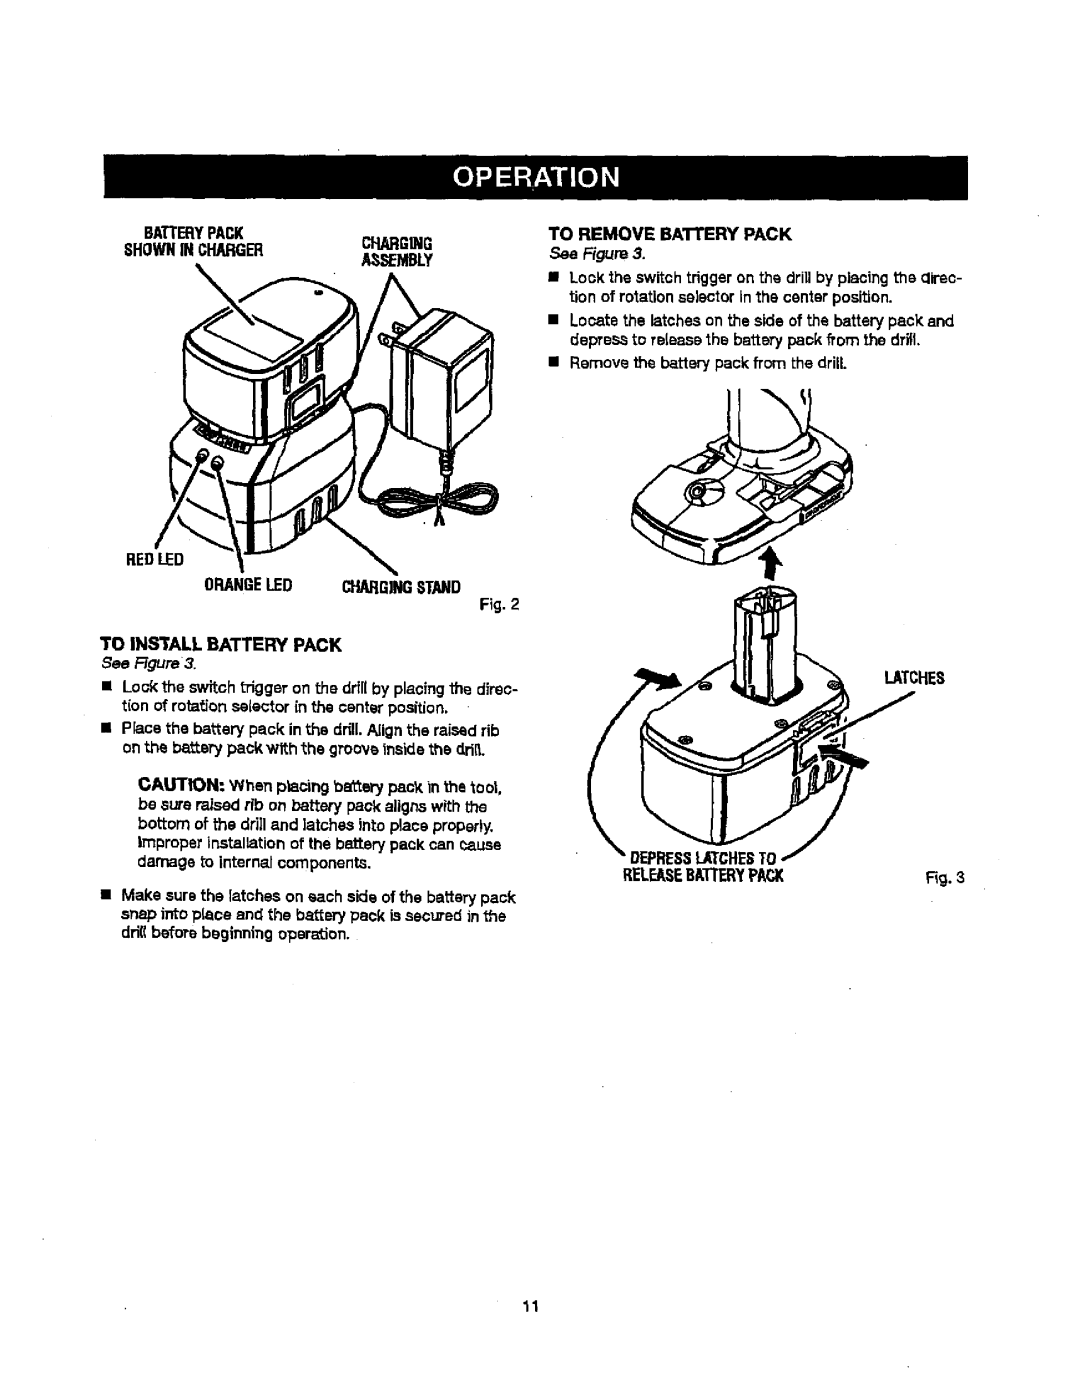 Craftsman 350, 315.11534 manual Batterypack Shownincharger Ci.Iging Assembly, Toremovebatterypack 